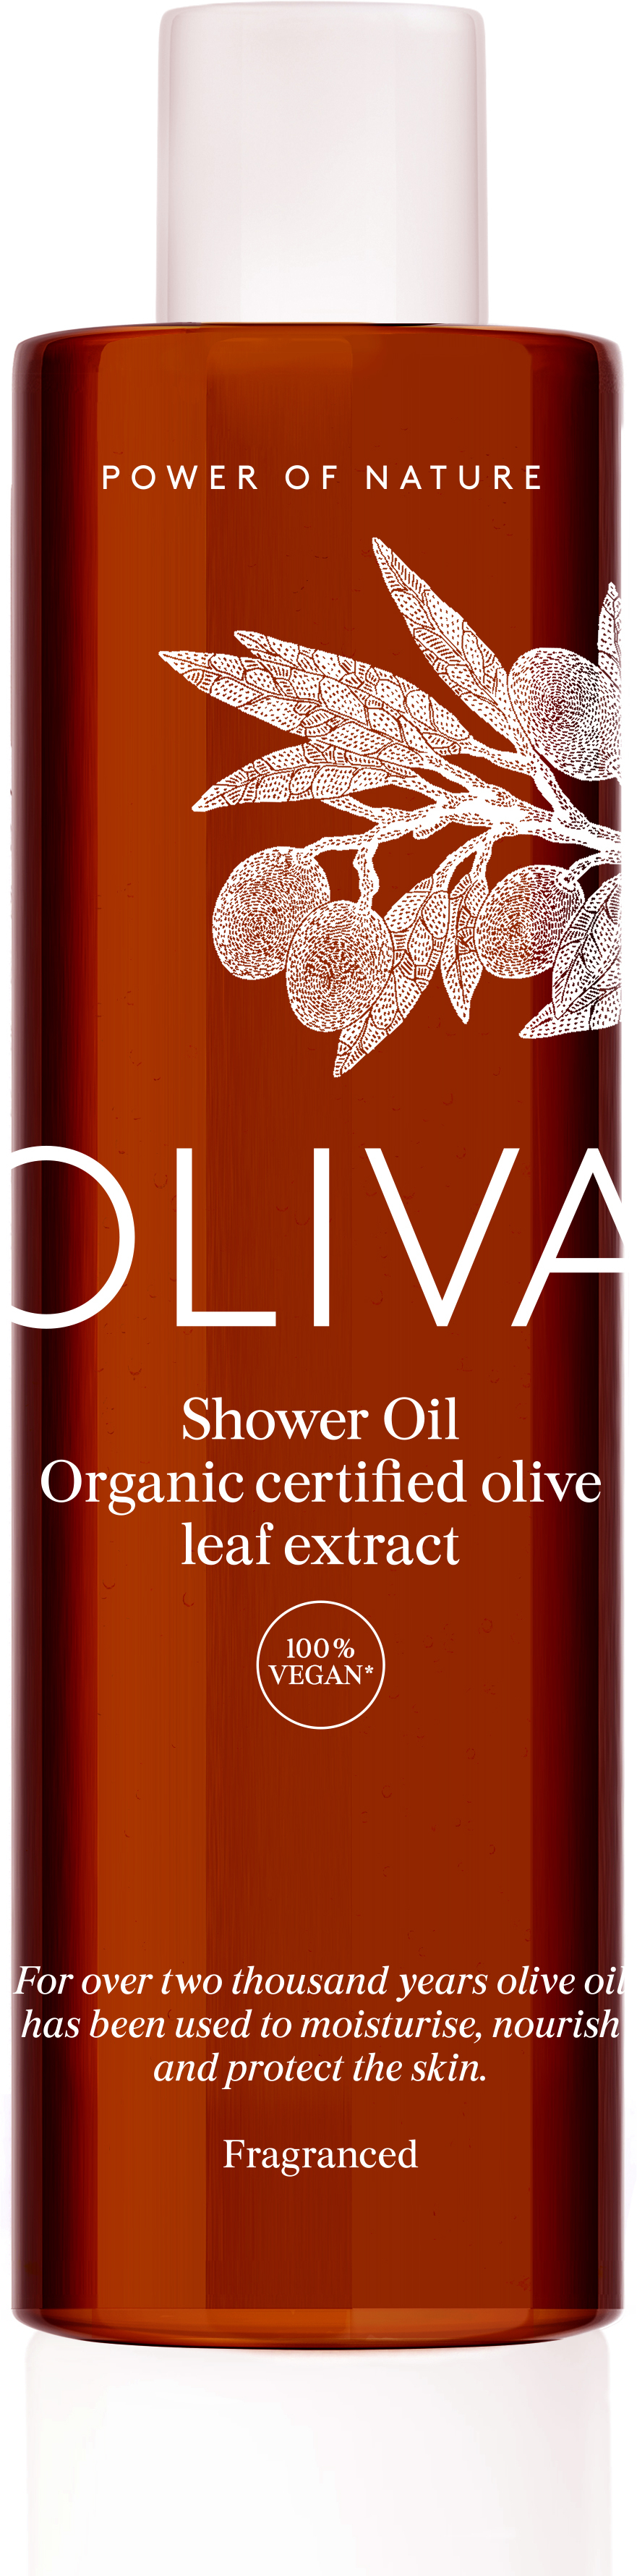 Oliva Shower oil parf 250 ml